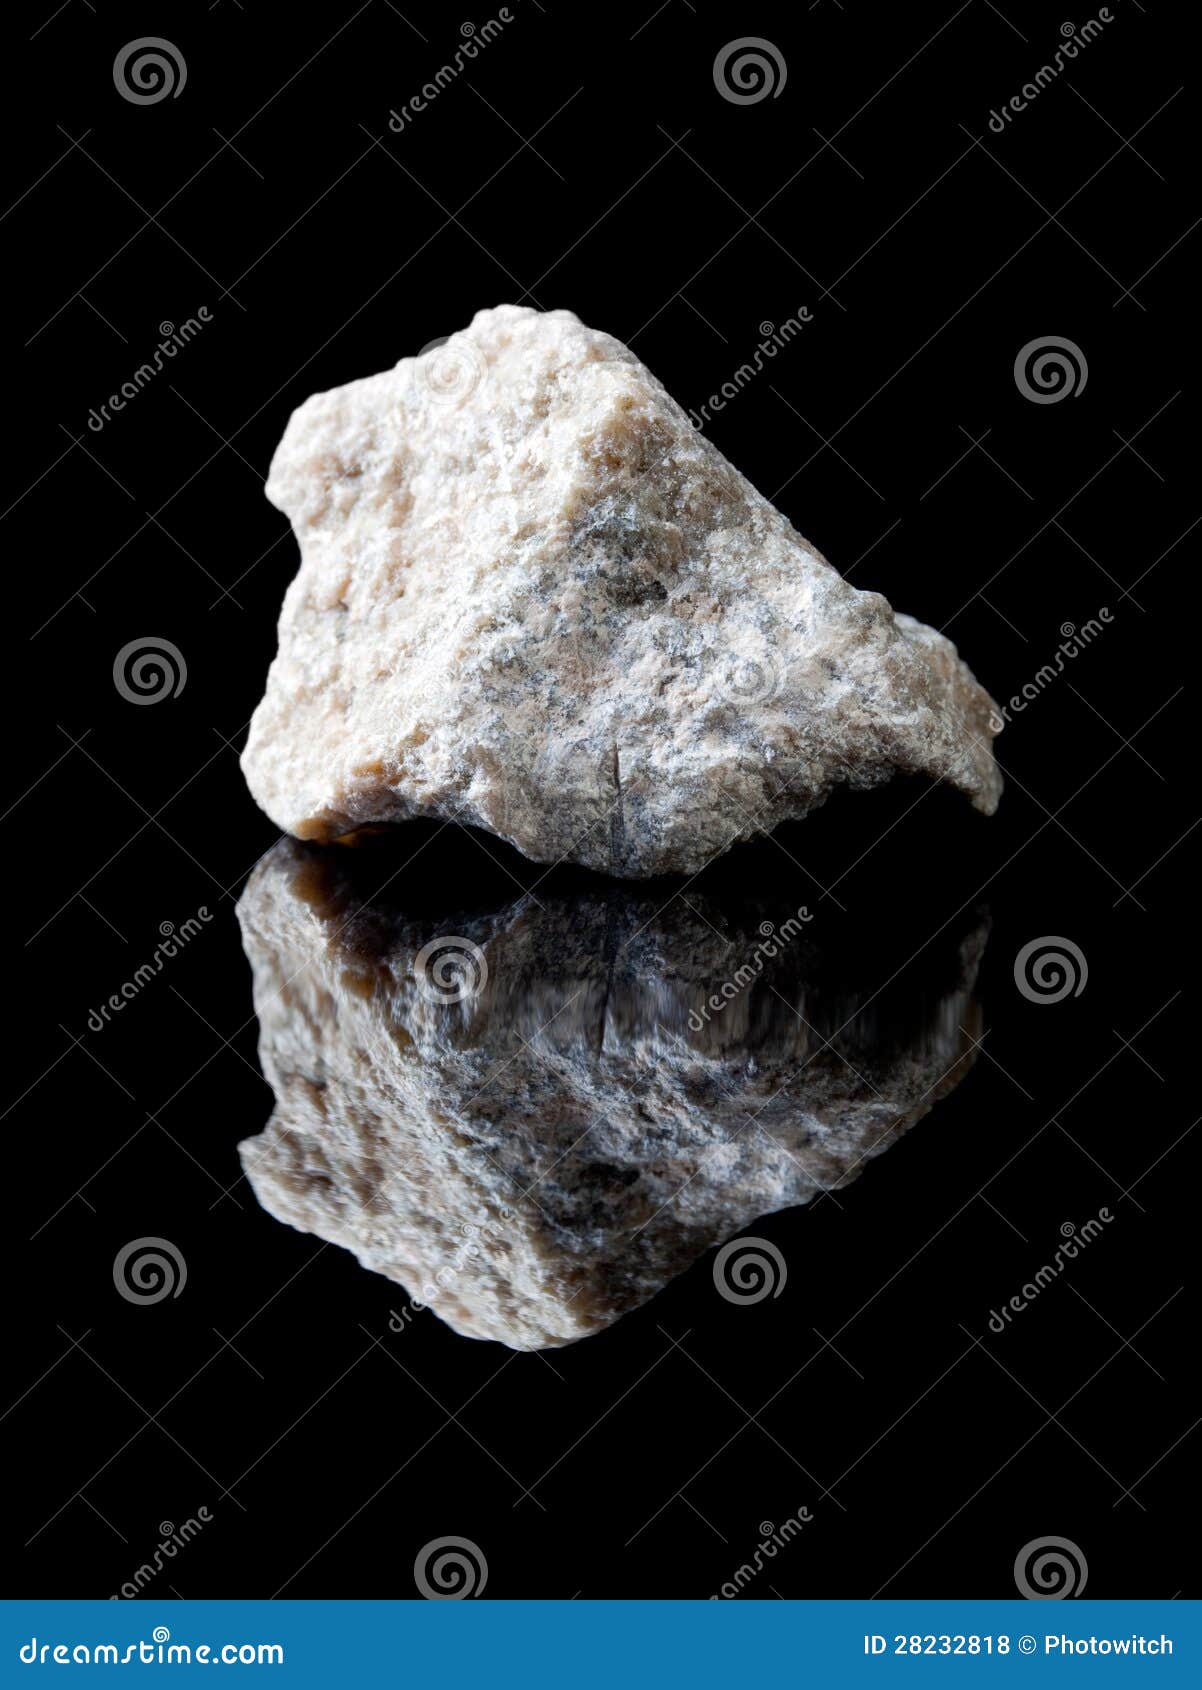 talc or talcum rock